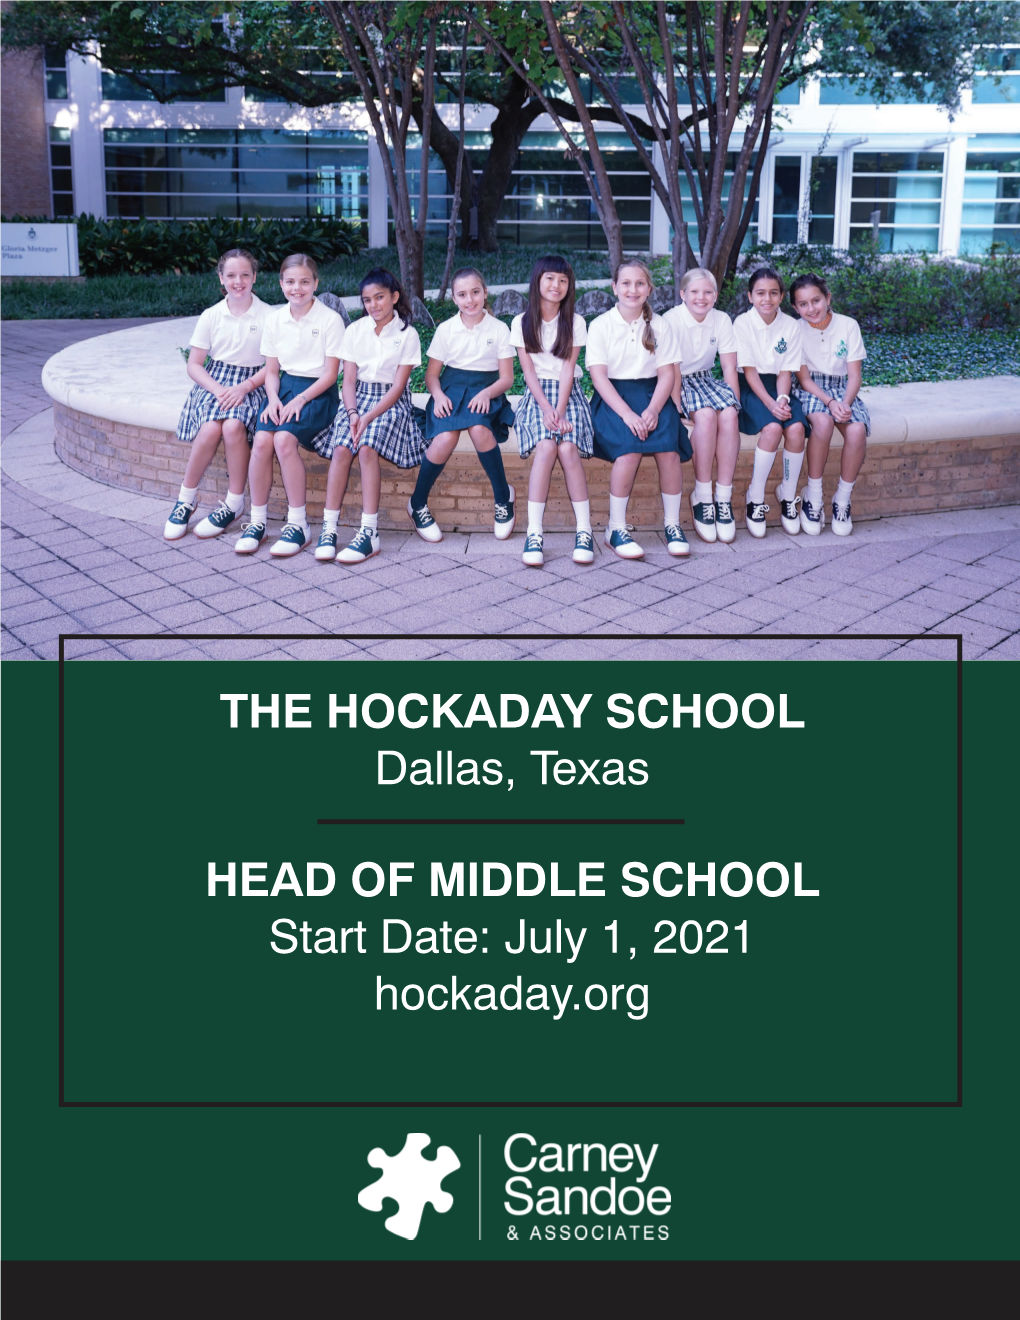 THE HOCKADAY SCHOOL Dallas, Texas